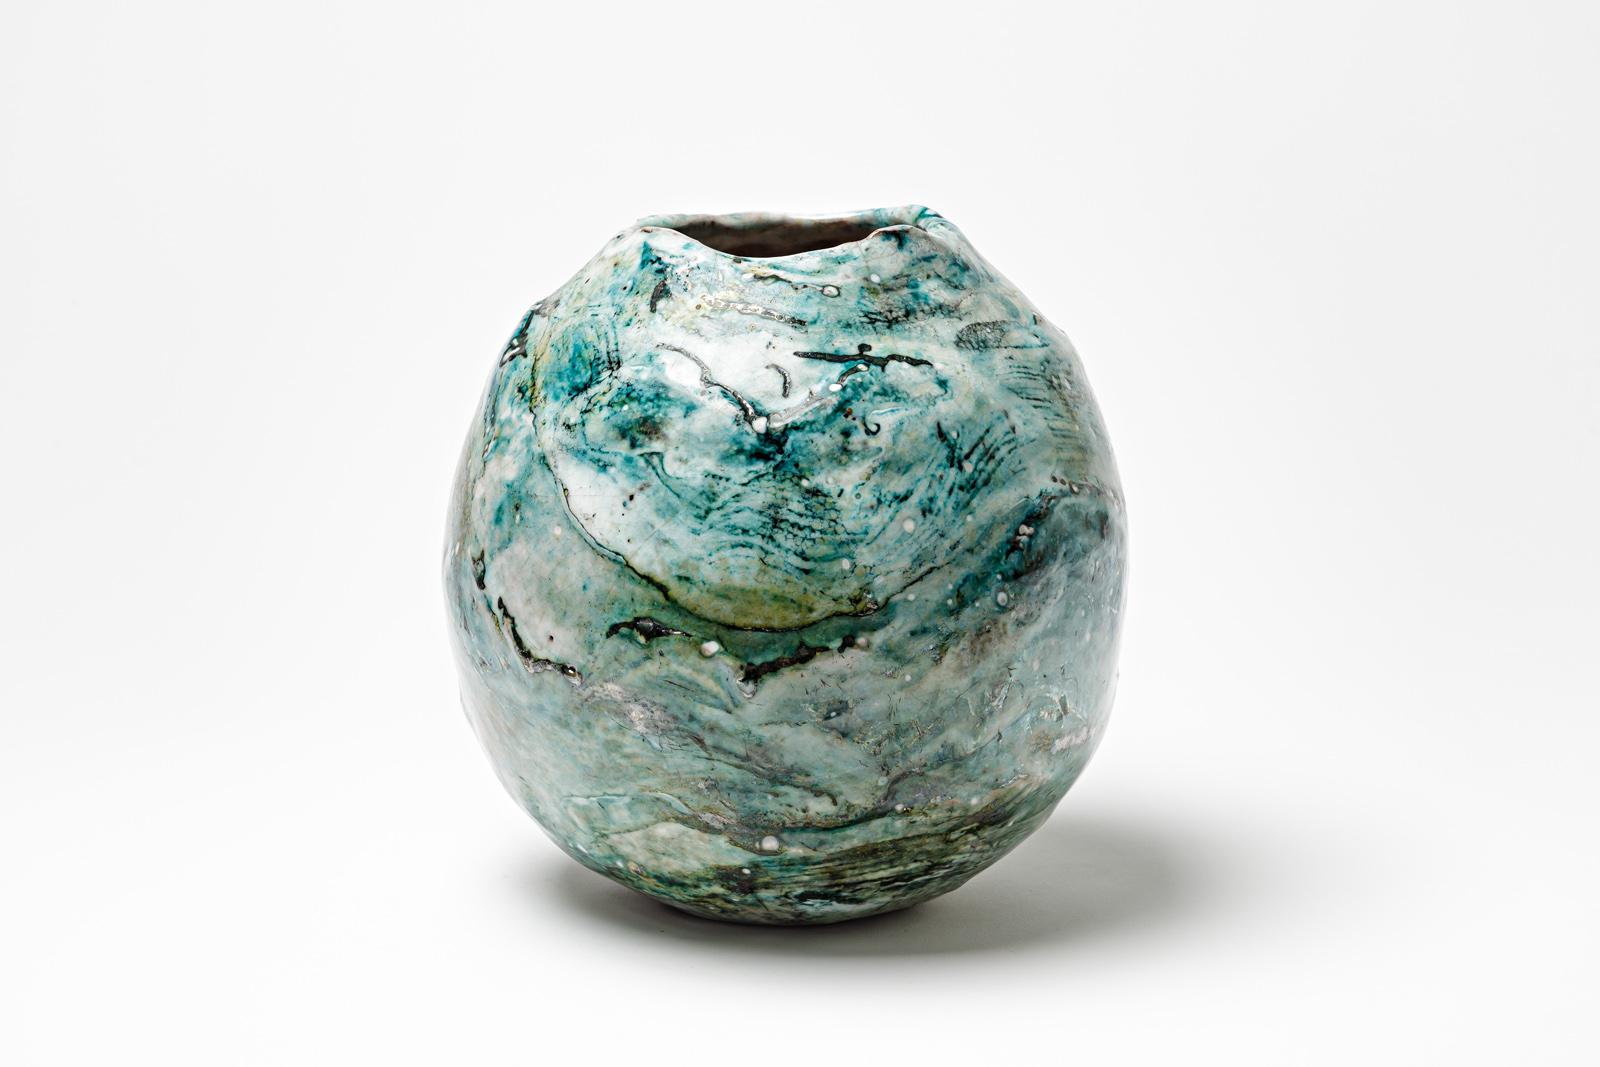 Blue and white glazed ceramic vase by Gisèle Buthod Garçon. 
Raku fired. Artist monogram under the base. Circa 1980-1990. 
H : 8.7’ x 7.4’ inches.